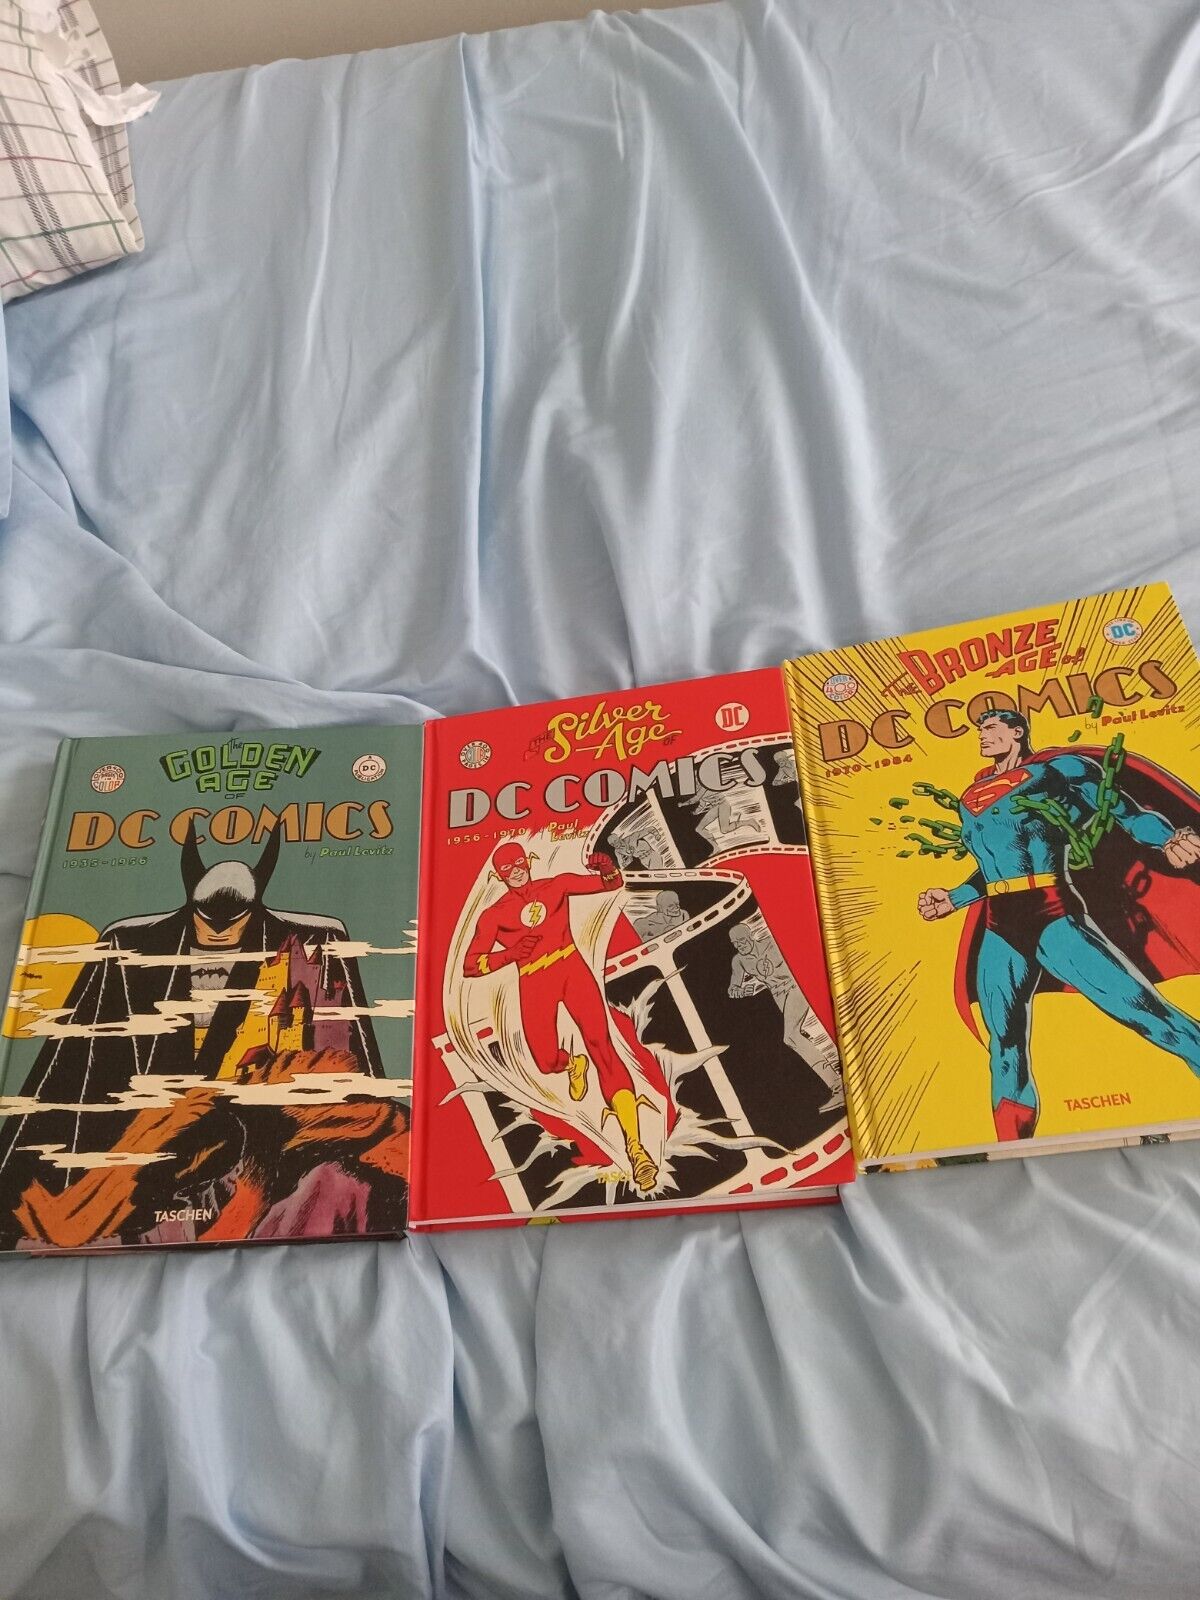 DC Comics THE GOLDEN/SILVER/BRONZE AGE OF DC COMICS